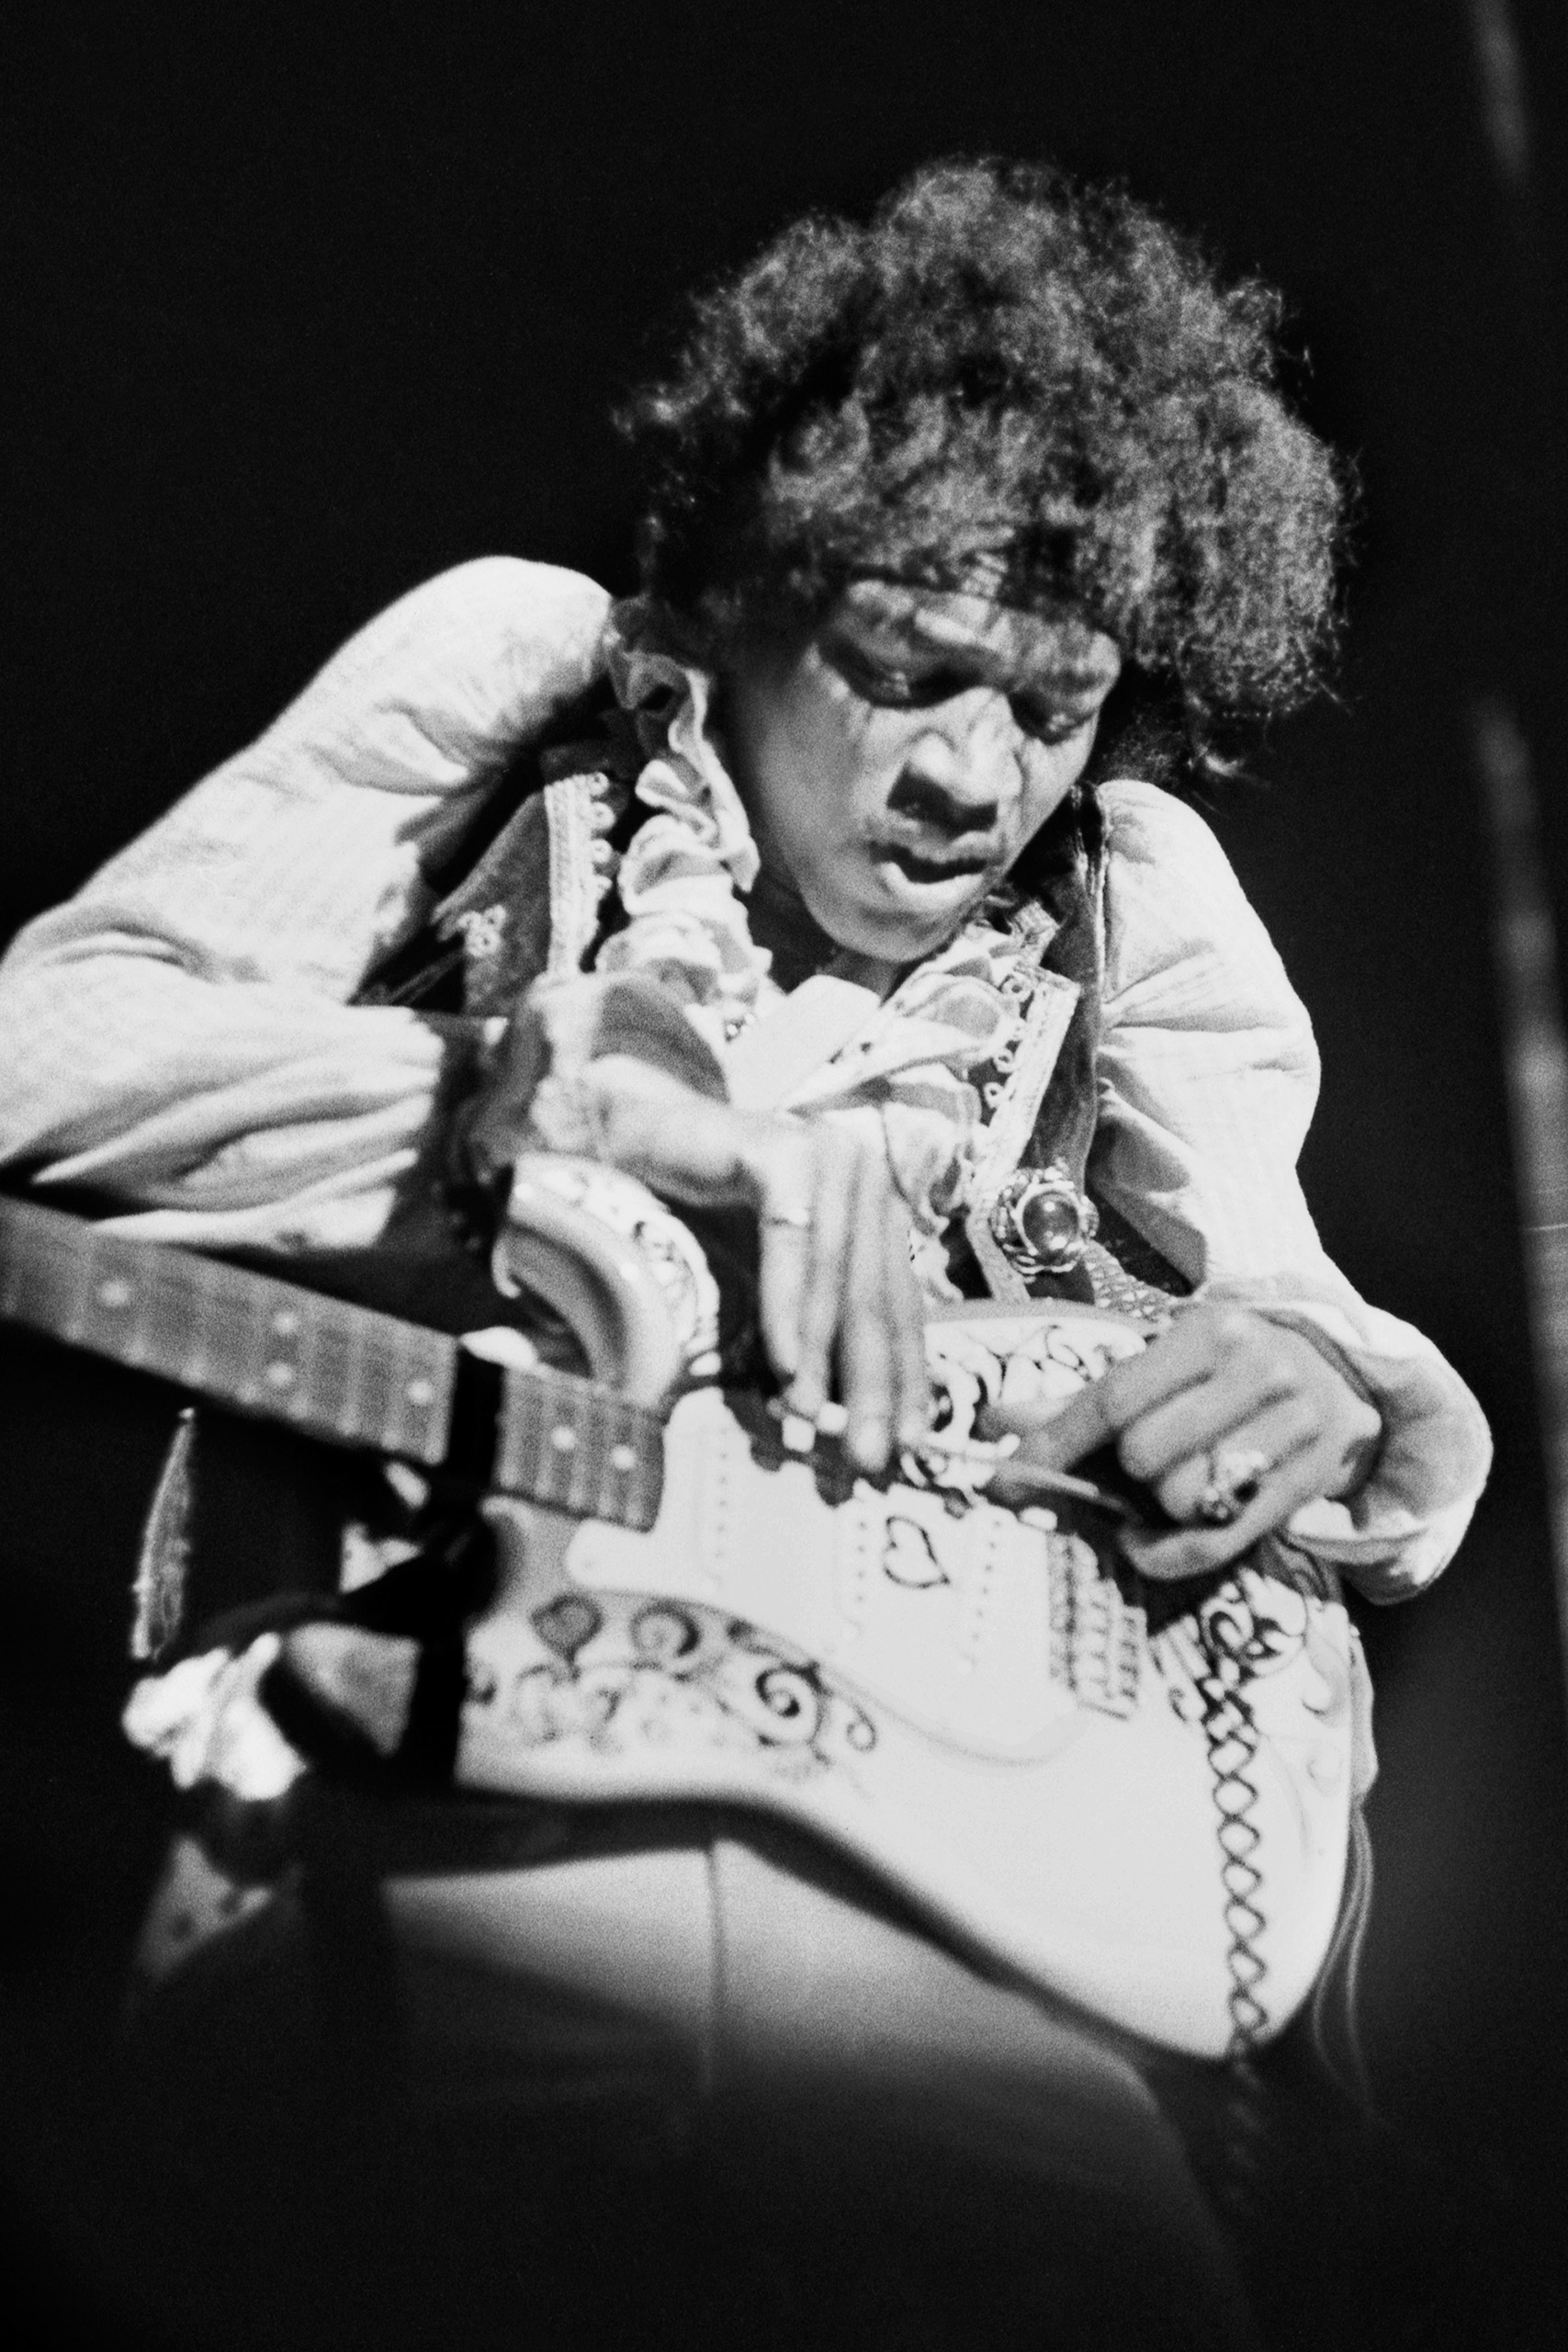 Jimi Hendrix on stage at the Monterey International Pop Music Festival on June 18, 1967.